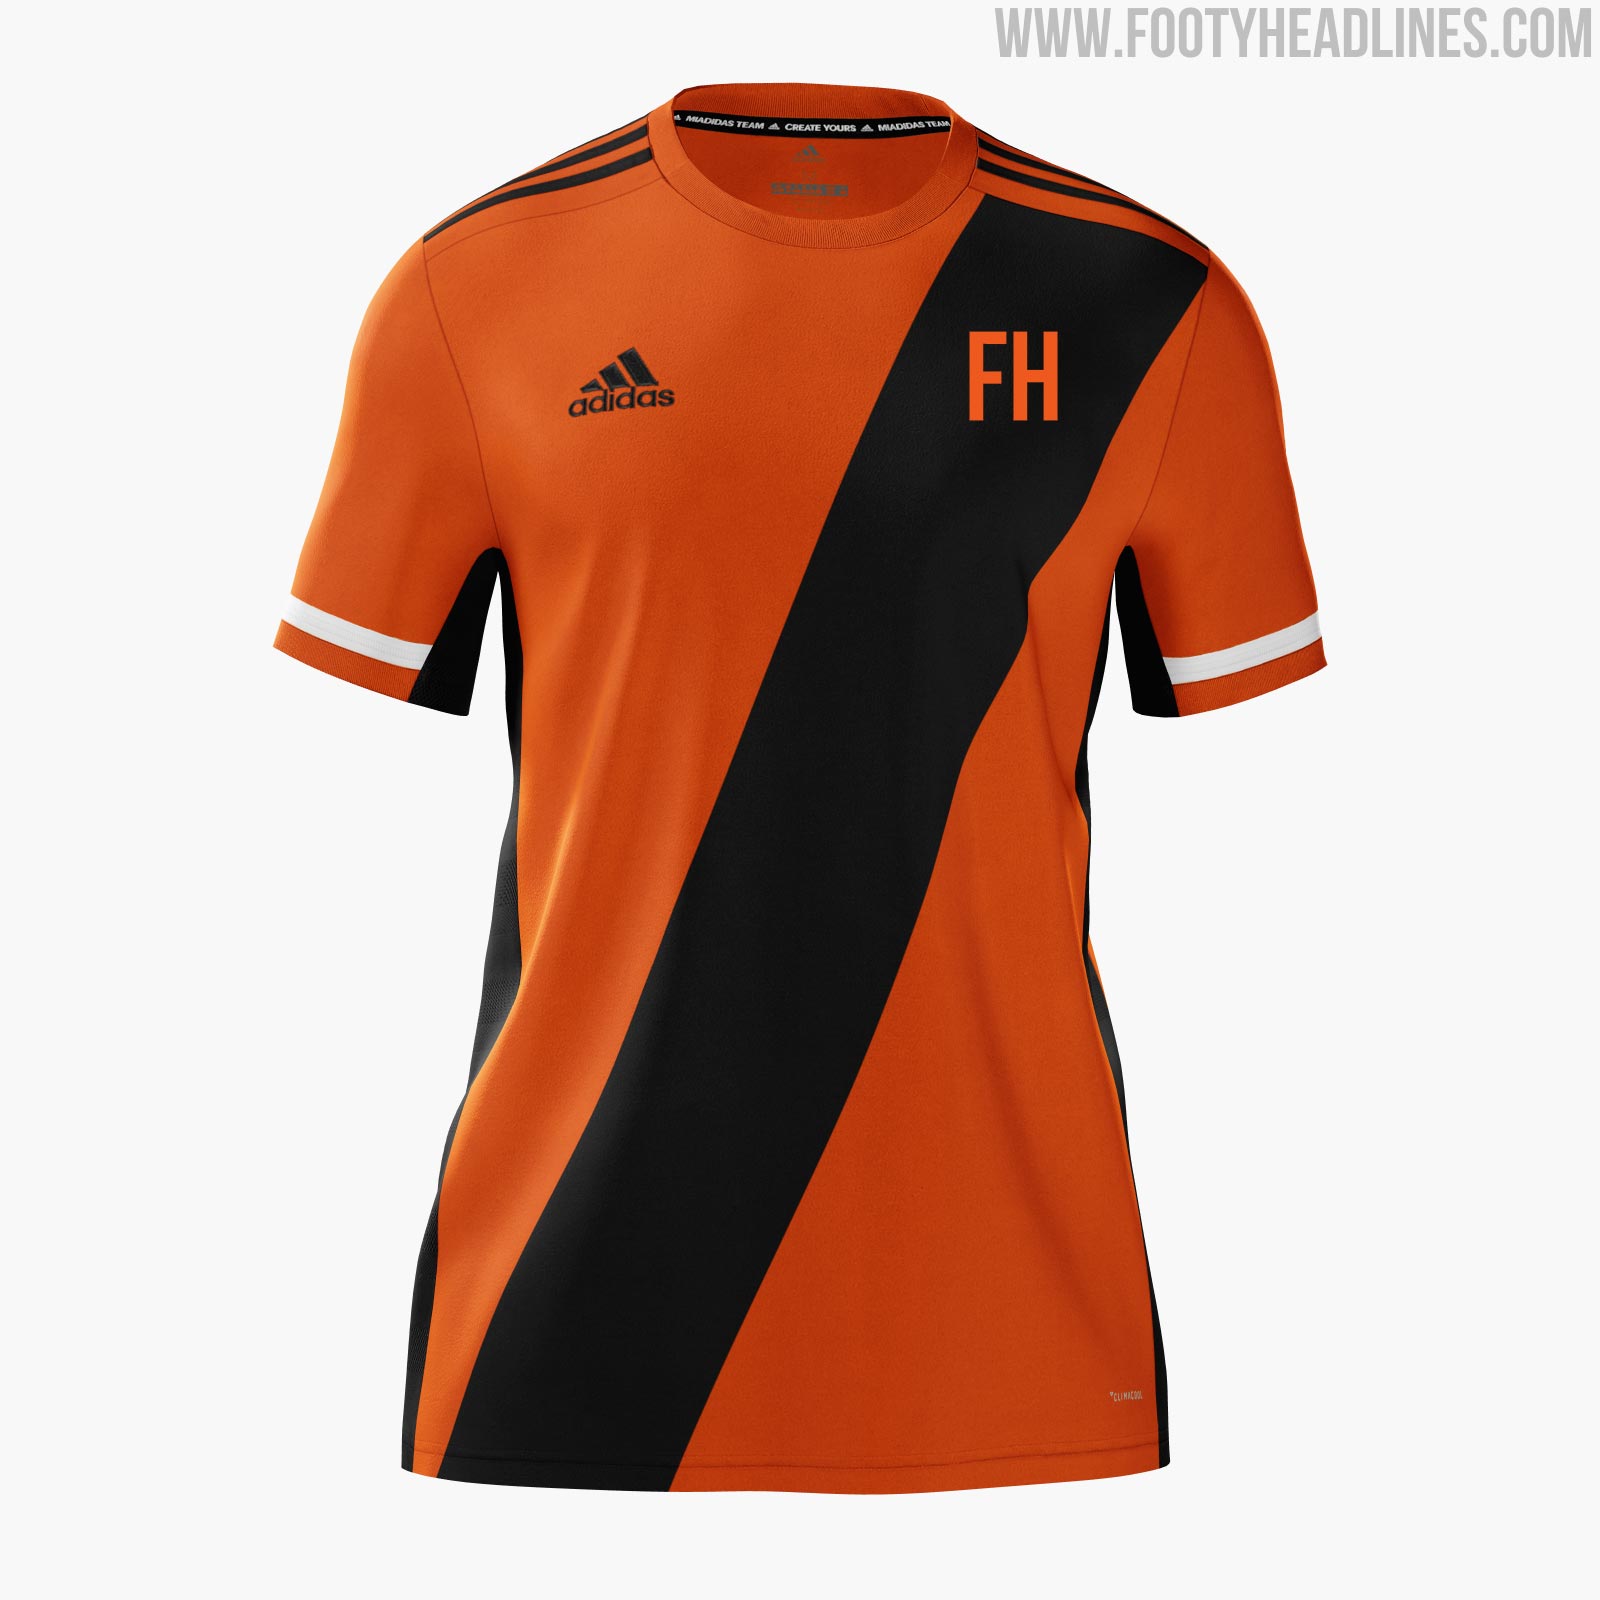 Be Used Clubs Worldwide | New Adidas mi Team 19 Football Kit Template Released - Footy